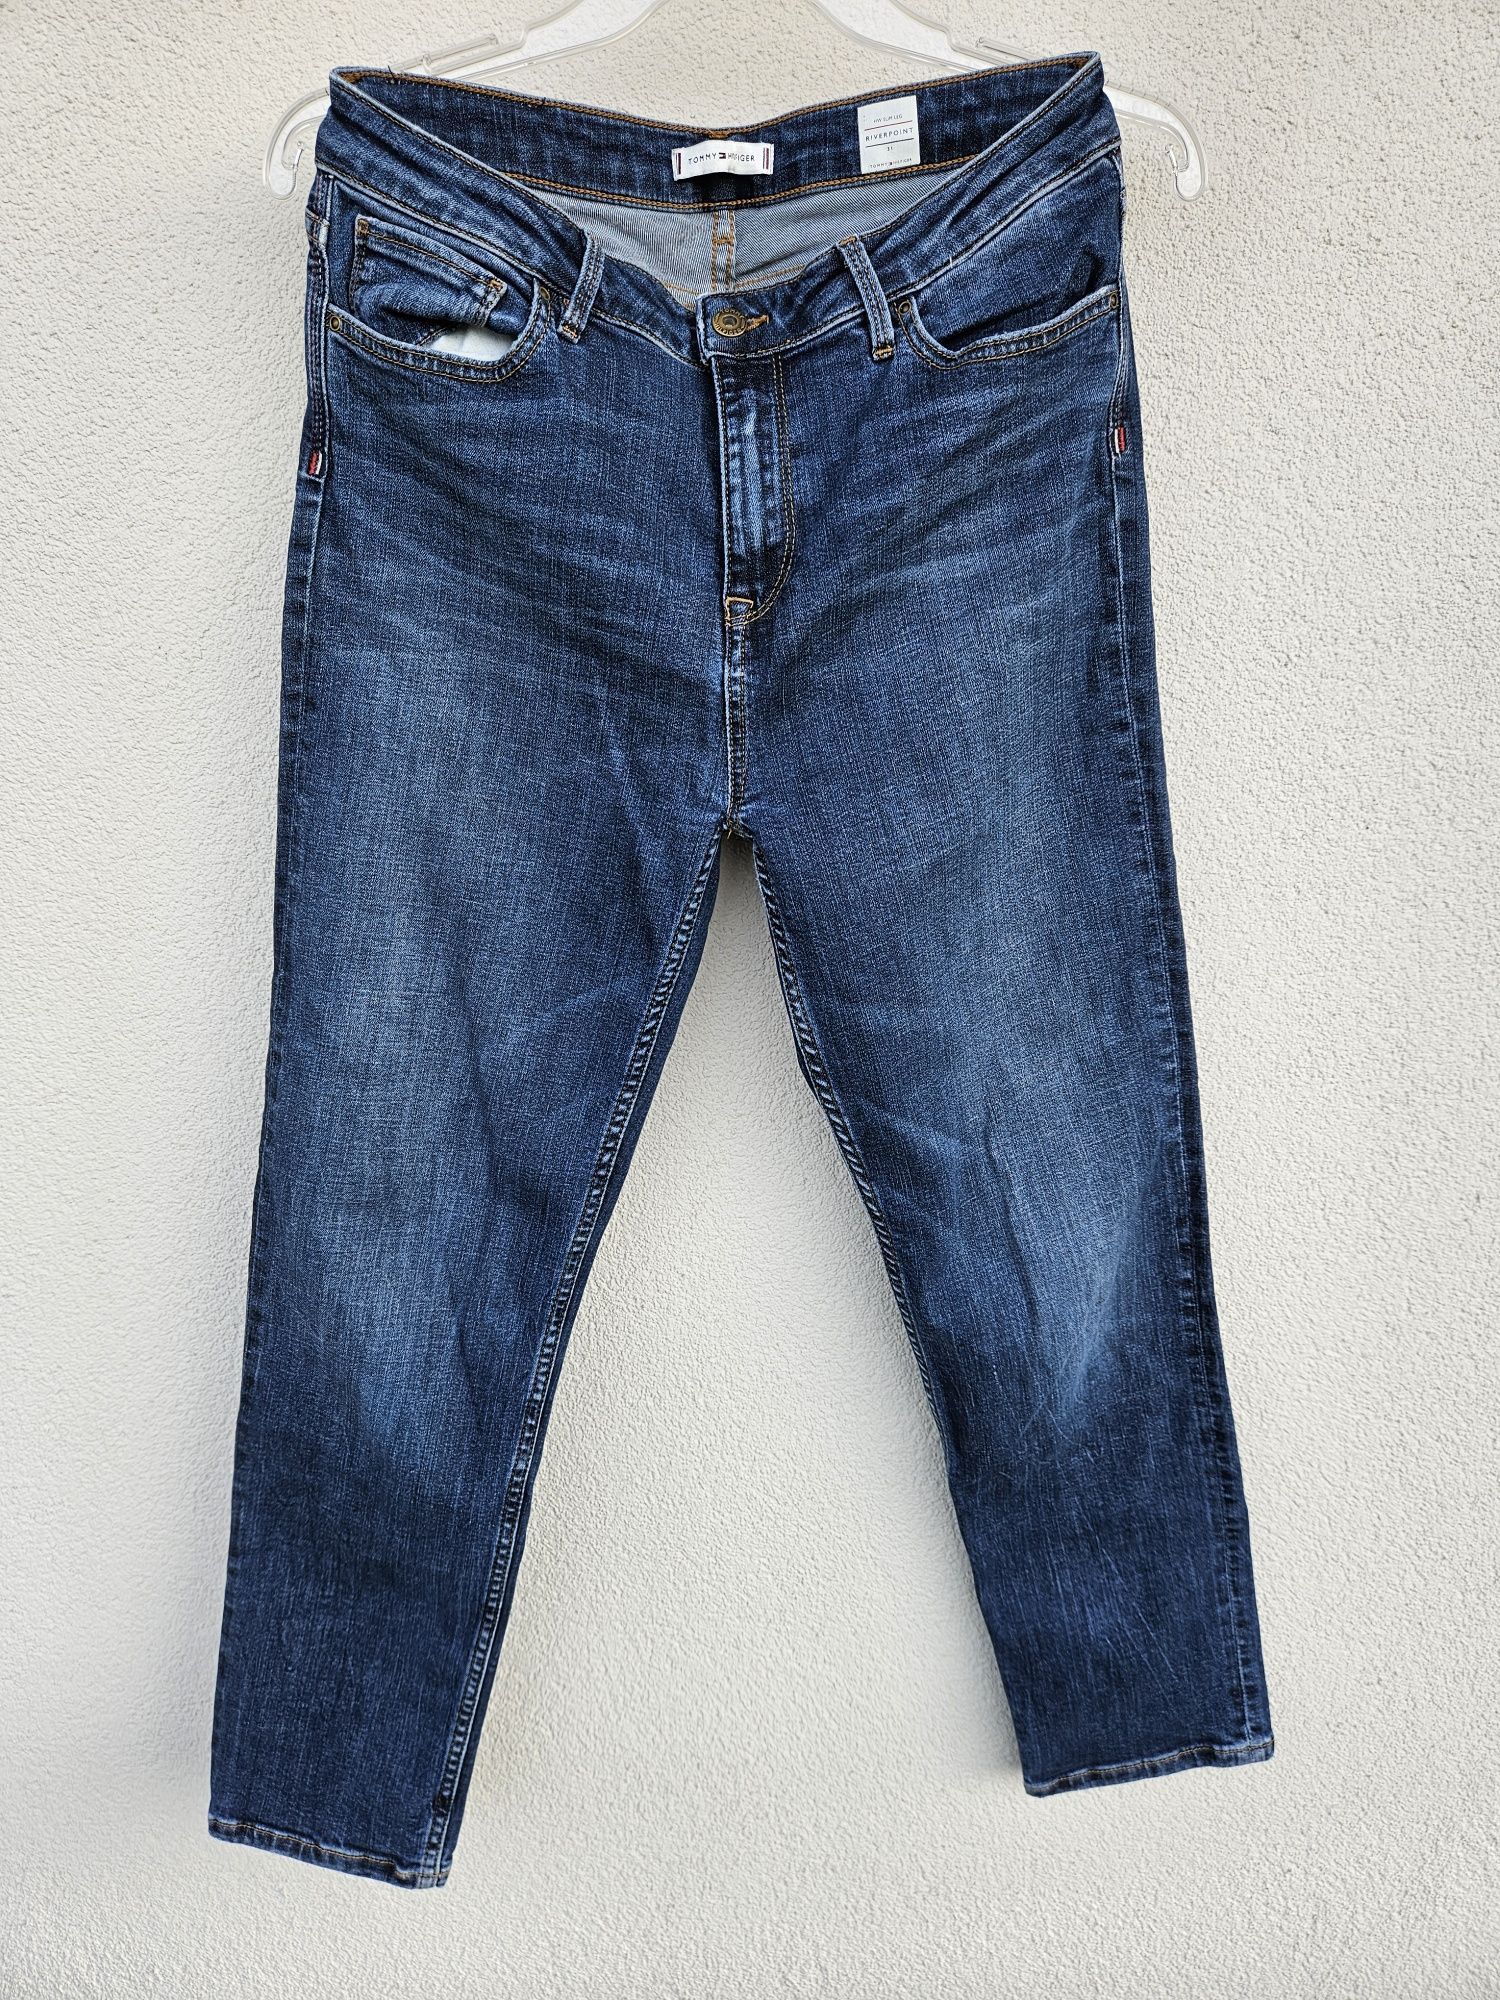 Spodnie jeans TOMMY HILFIGER HW Slim Leg Riverpoint  - warto